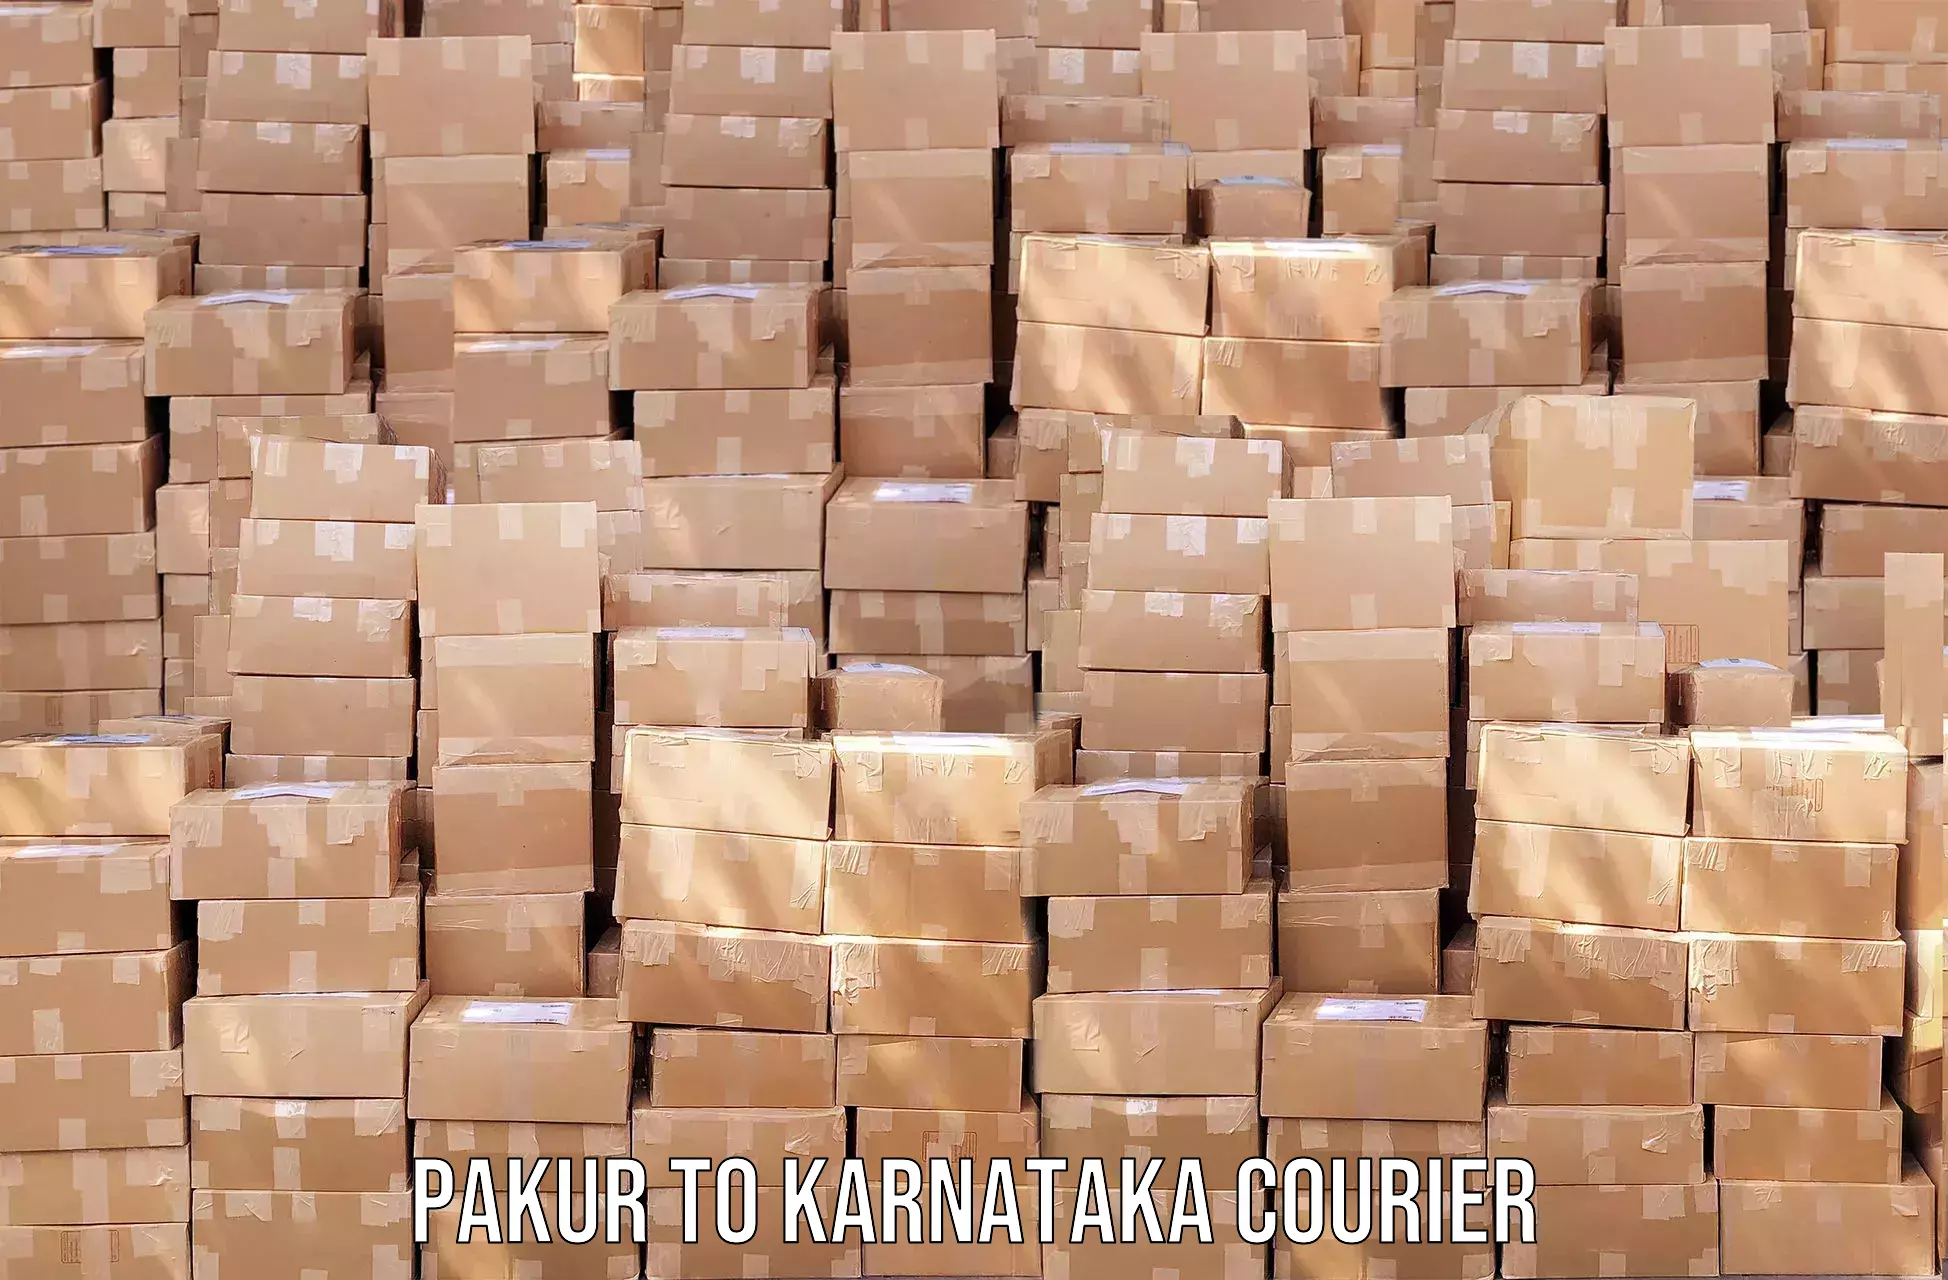 Parcel service for businesses Pakur to Kotturu